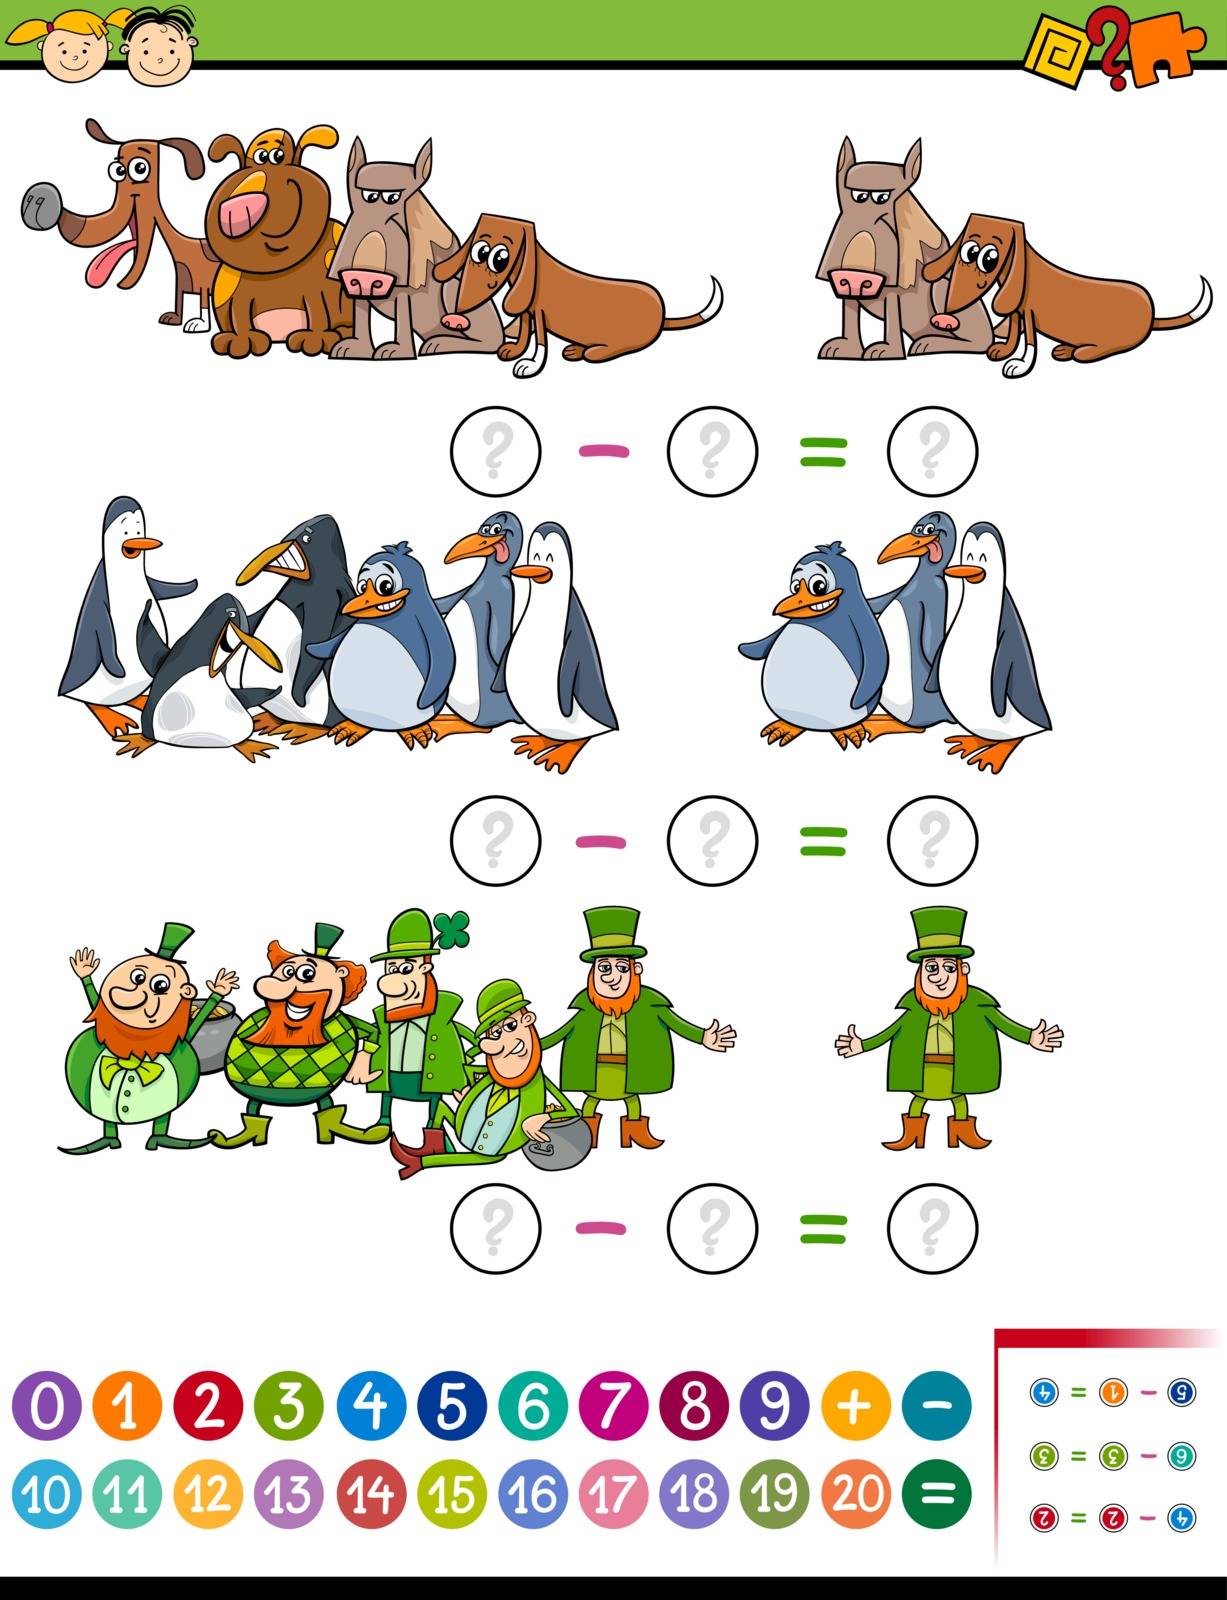 math task for preschool children by izakowski